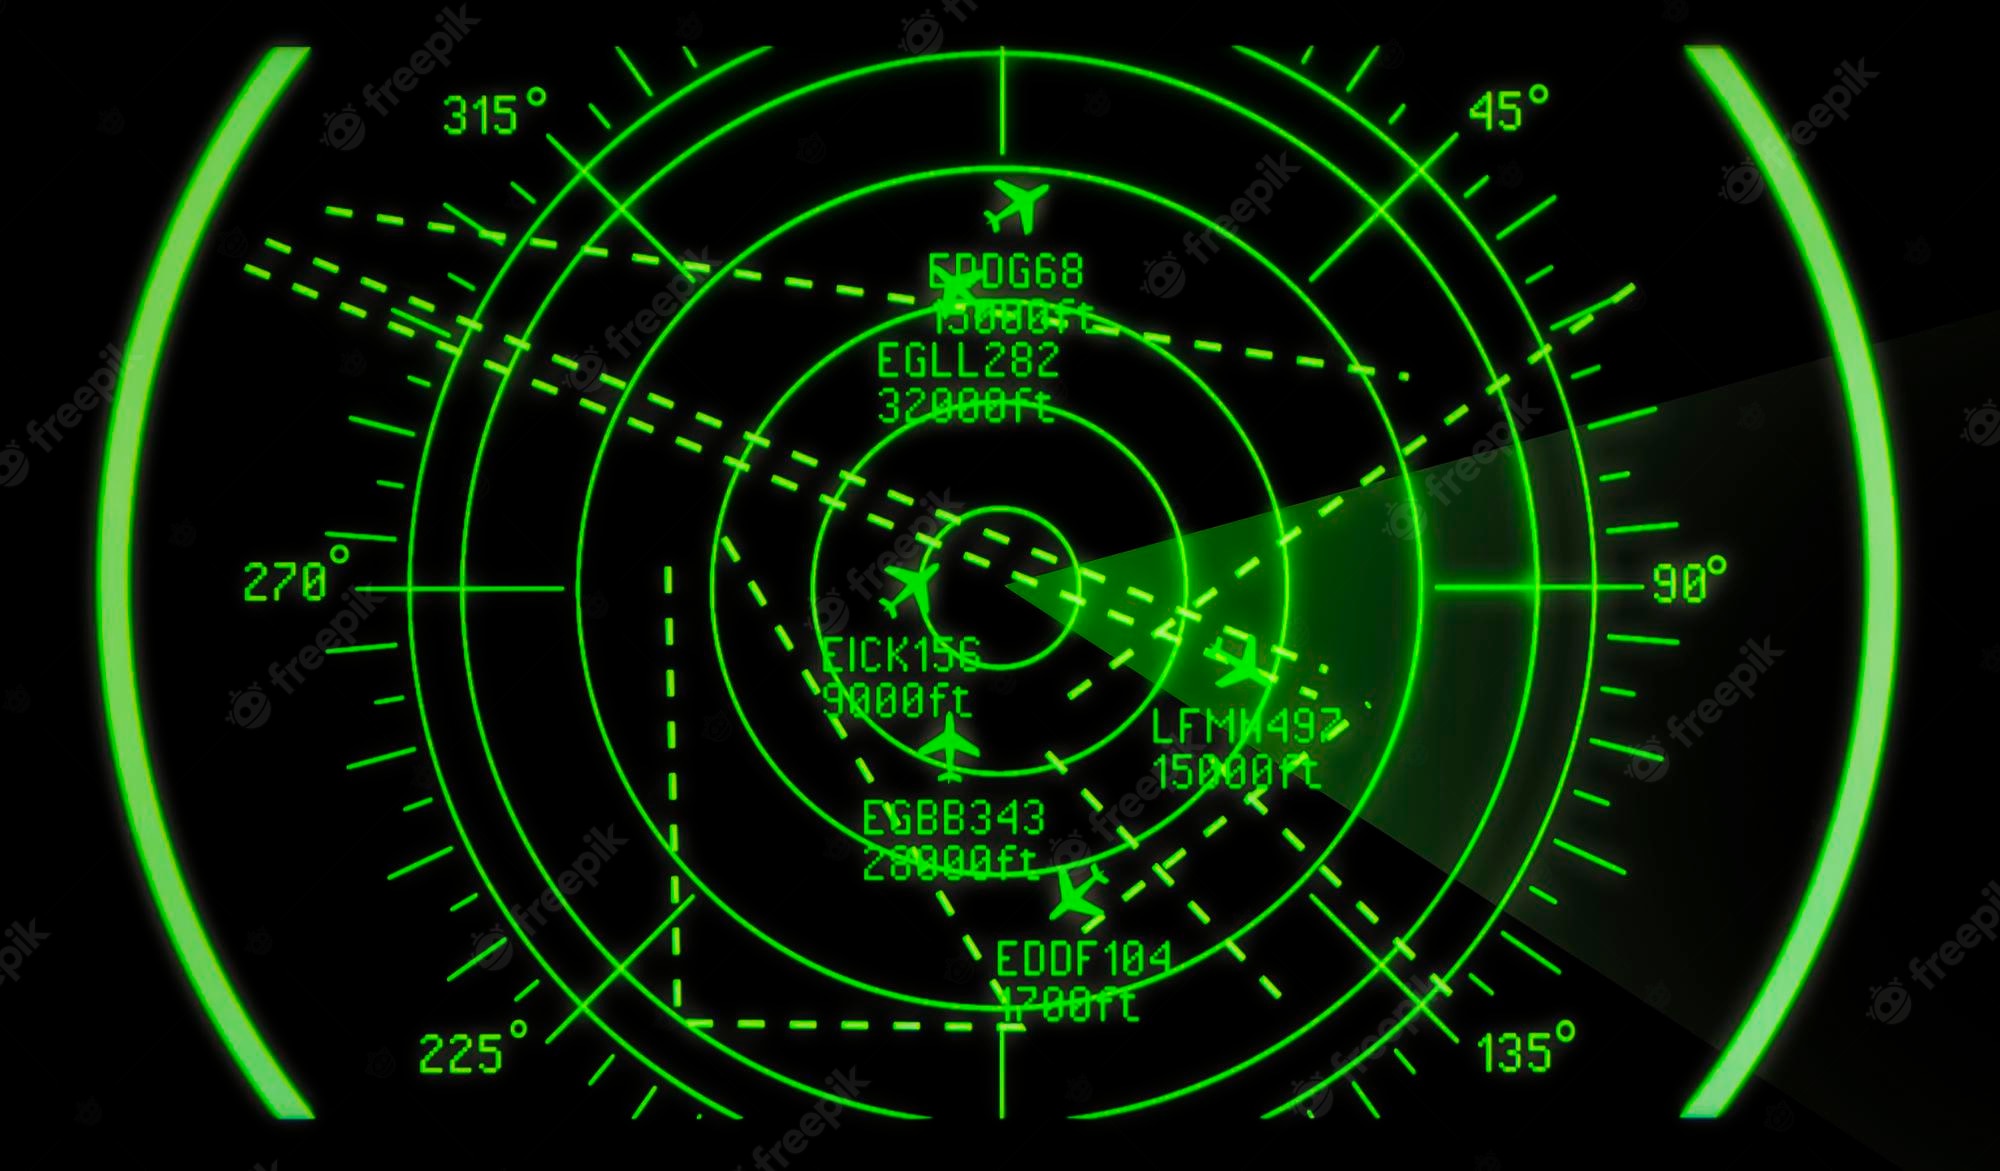 Air Traffic Controller Image. Free Vectors, & PSD